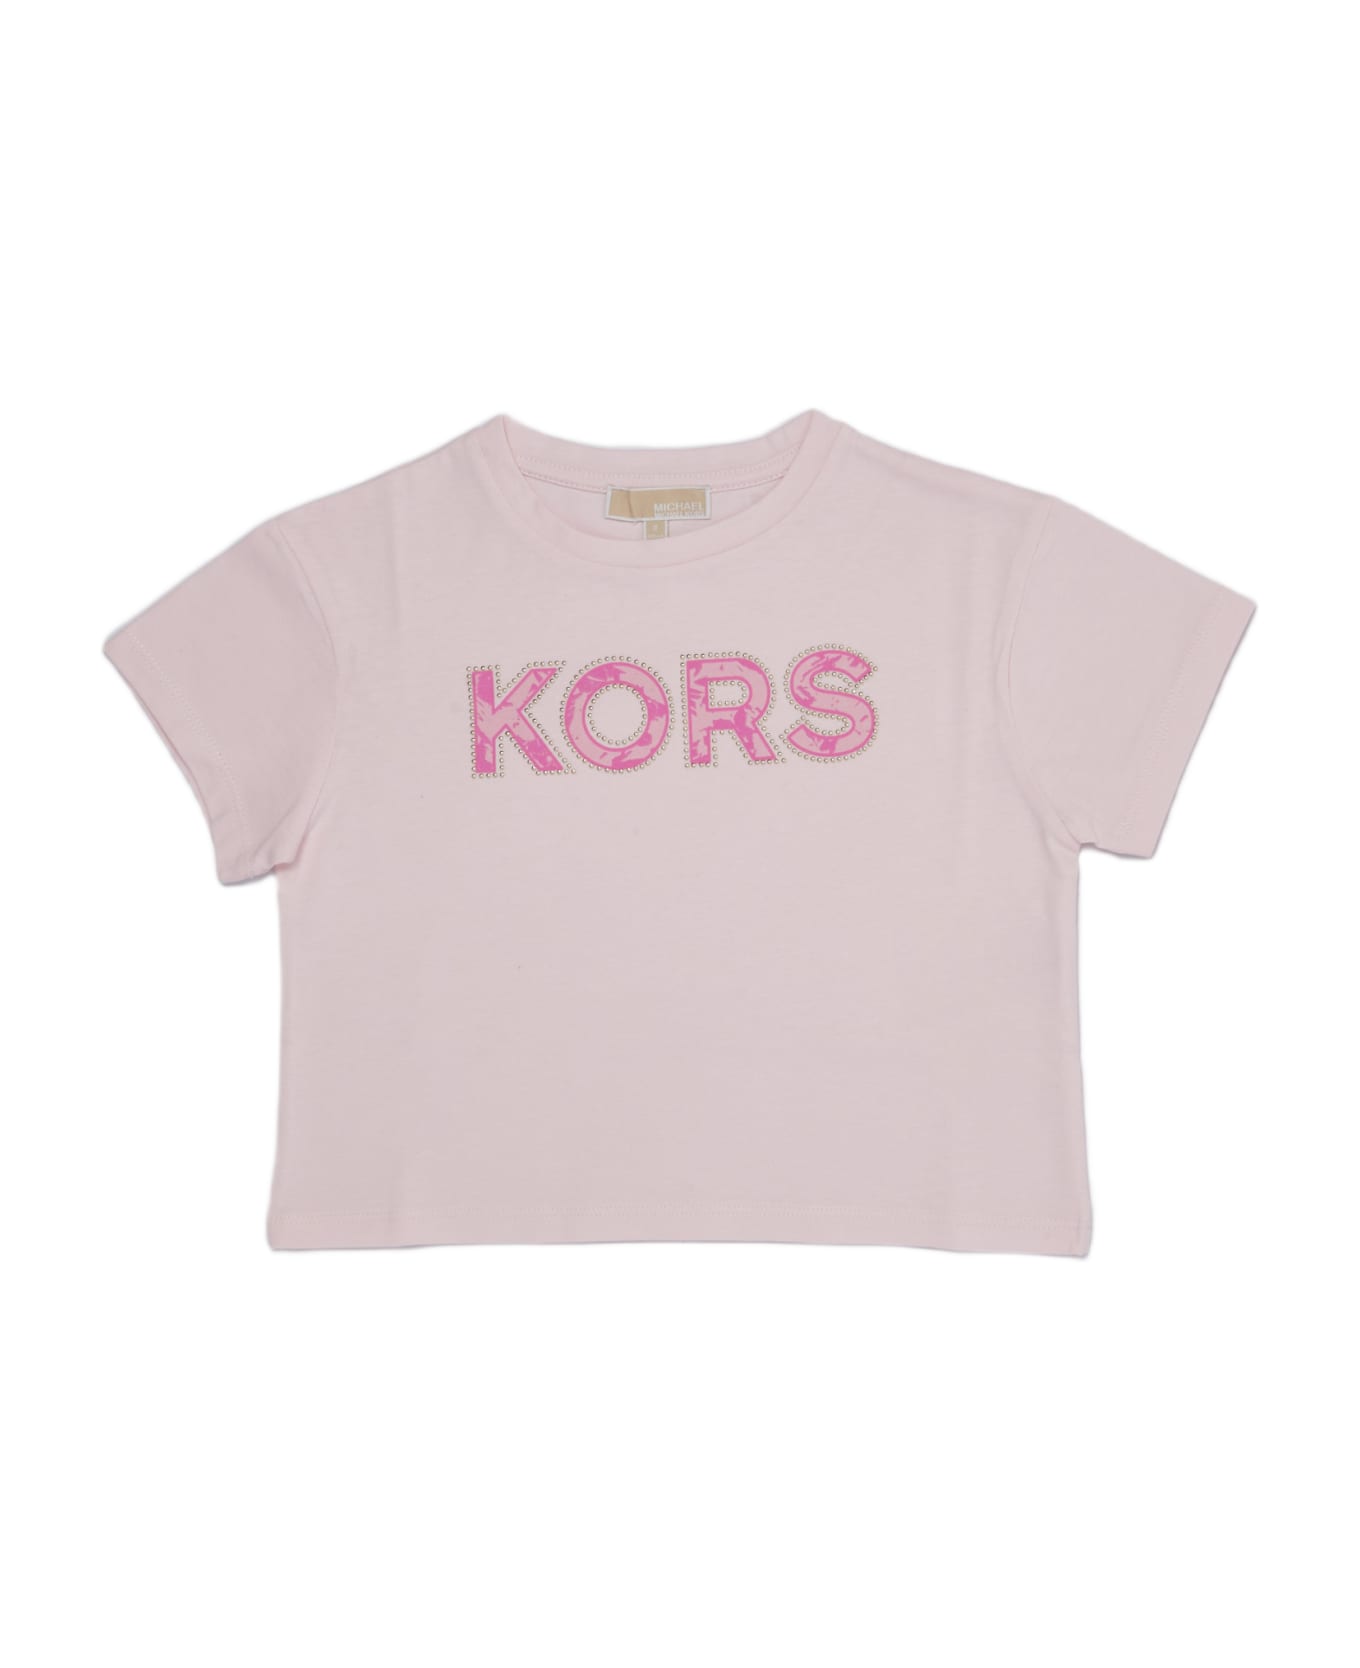 Michael Kors T-shirt T-shirt - ROSA CHIARO